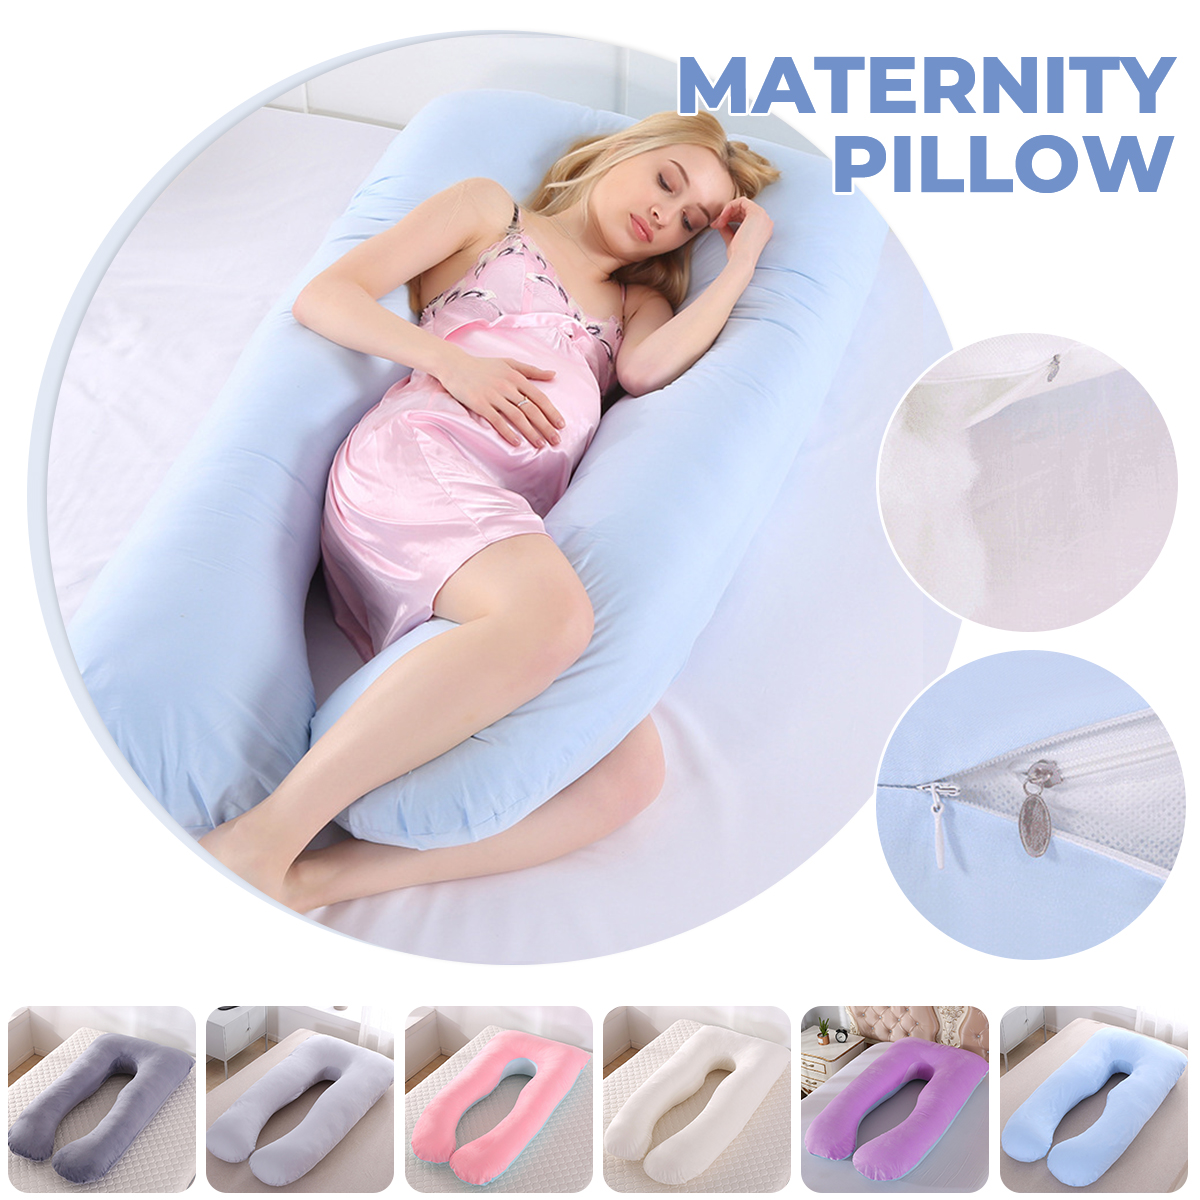 Pillow-Breastfeeding-Pillow-Cushion-For-Women-Sleep-1960438-1